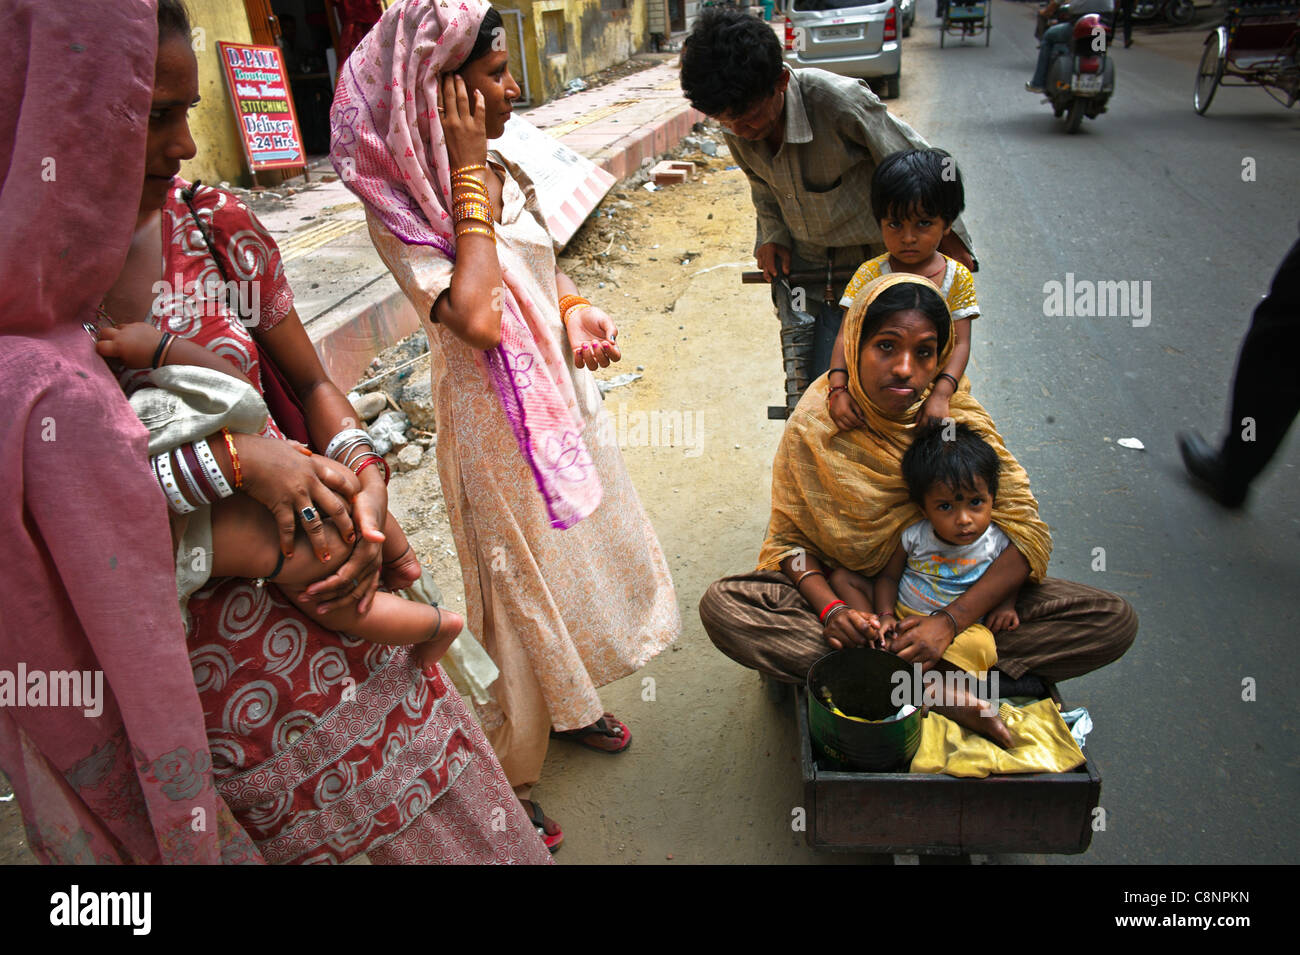 New Delhi Indian Glance Street scene in New Delhi Stock Photo